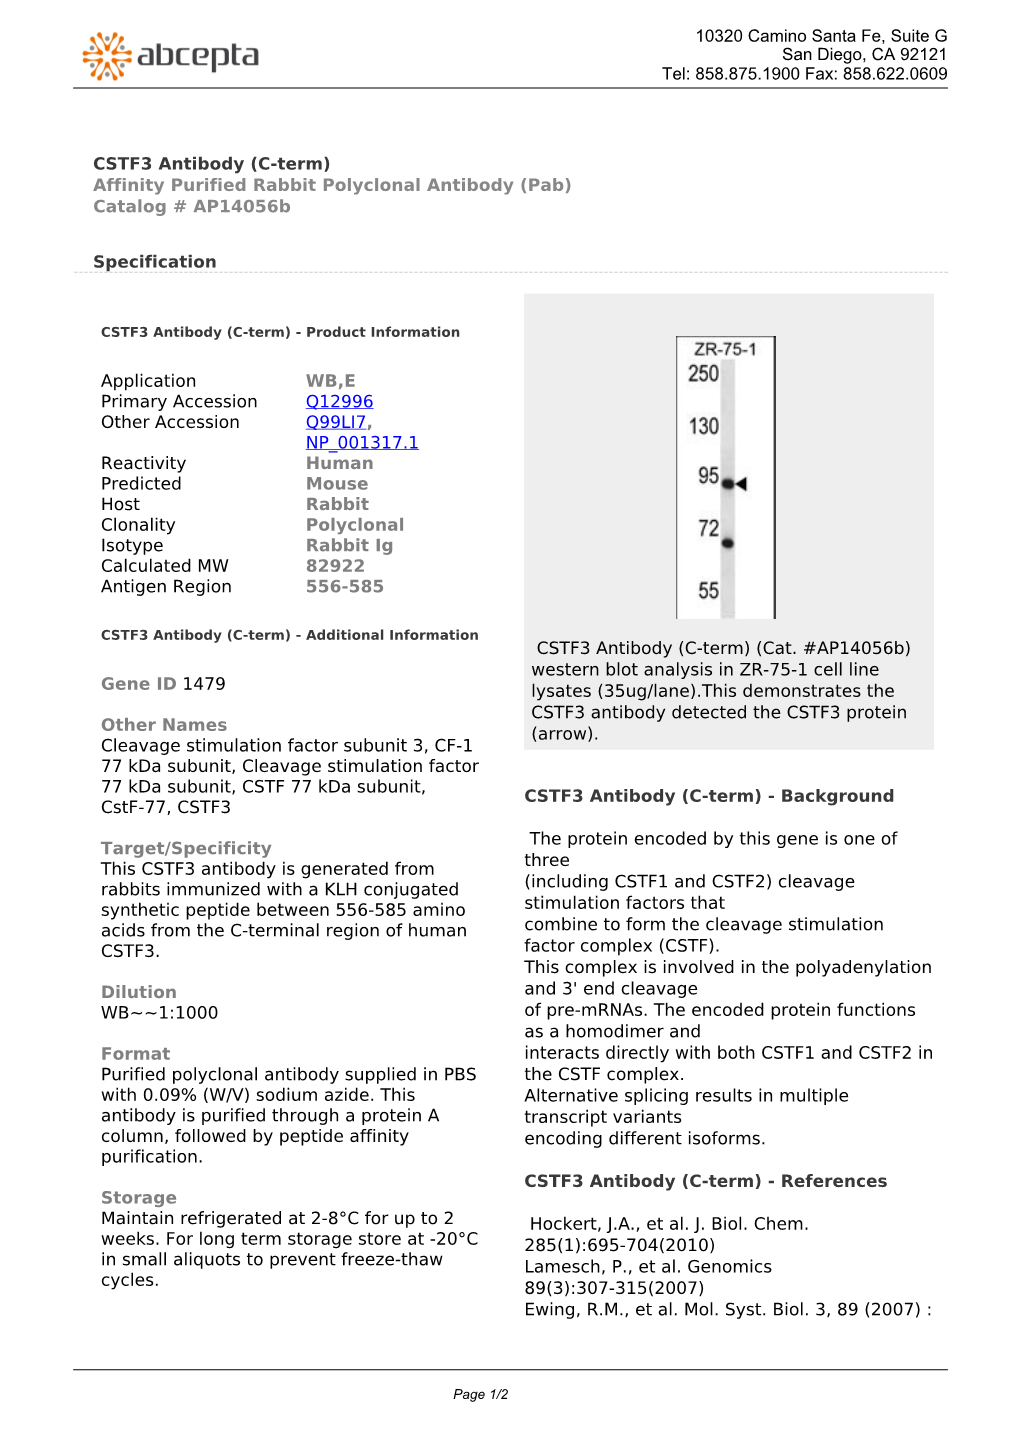 CSTF3 Antibody (C-Term) Affinity Purified Rabbit Polyclonal Antibody (Pab) Catalog # Ap14056b